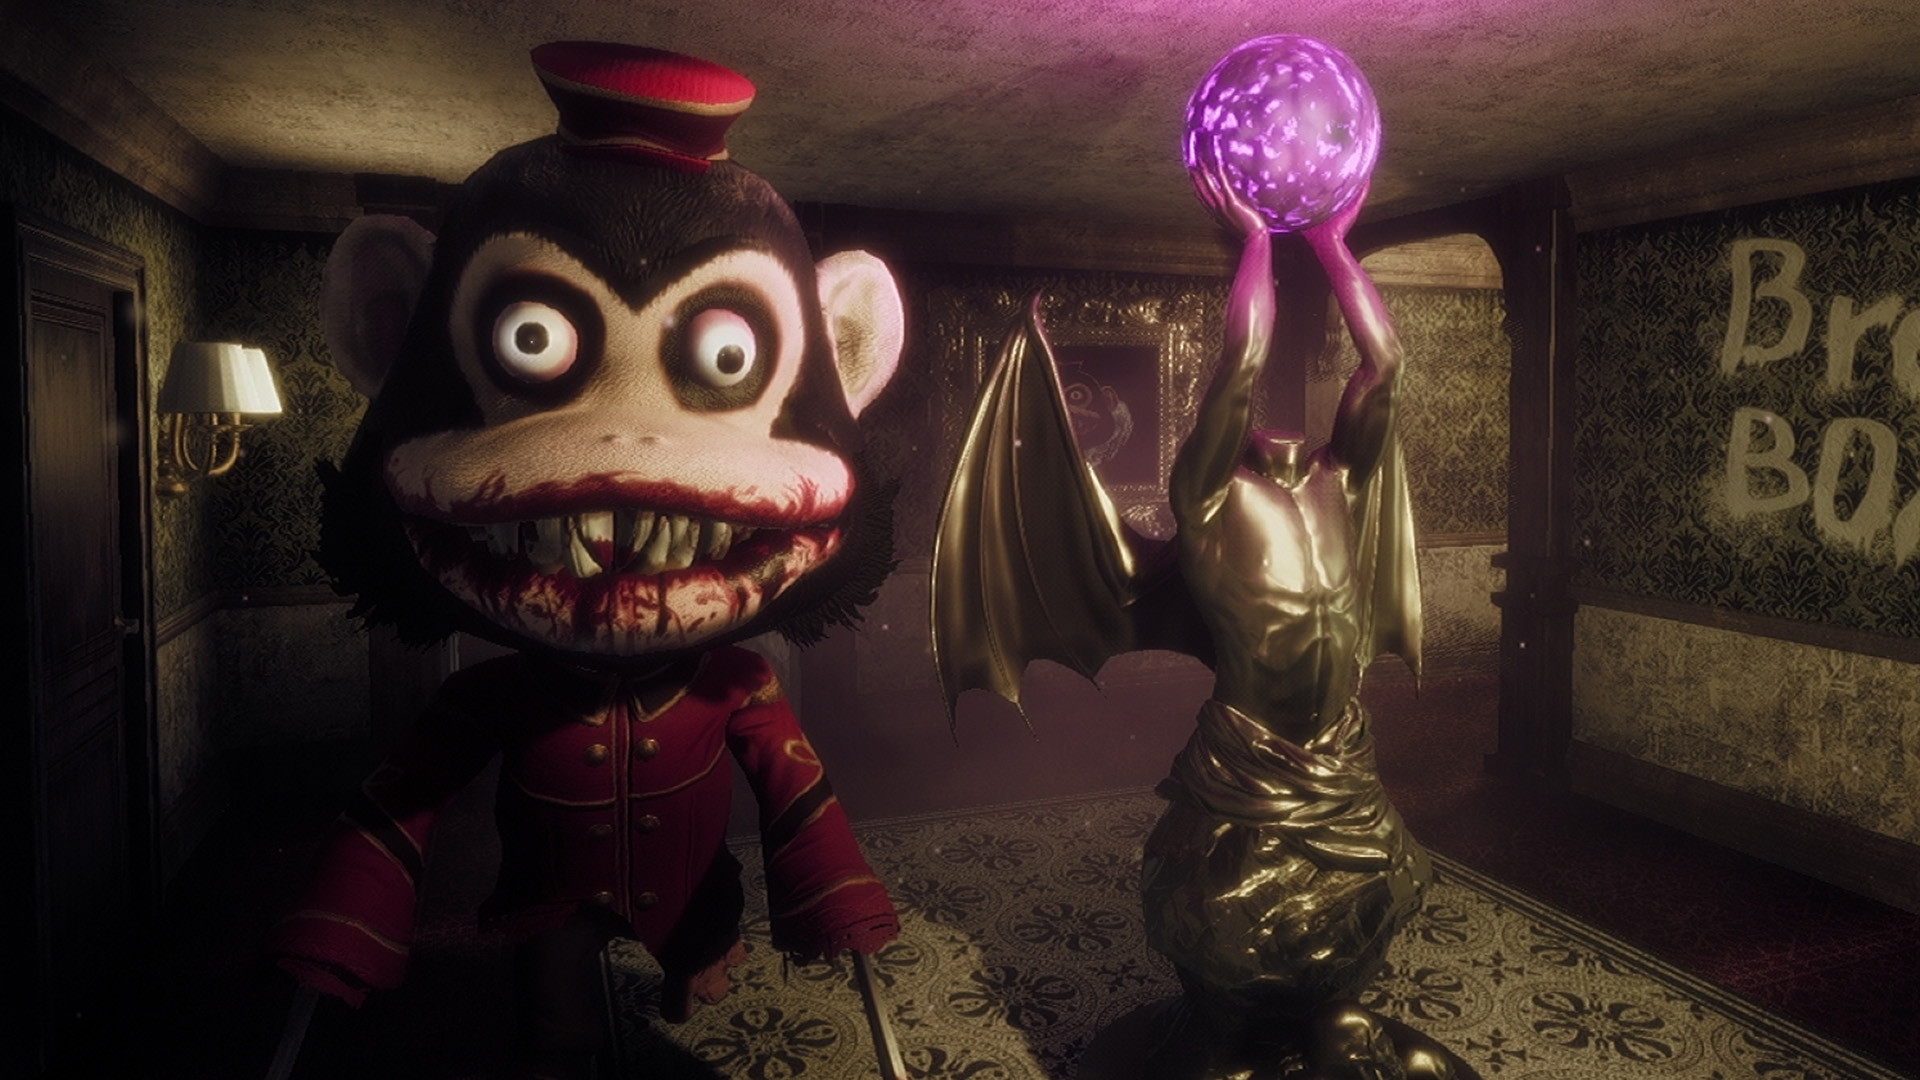 Monsters & Mortals - Poppy Playtime Panic DLC no Steam